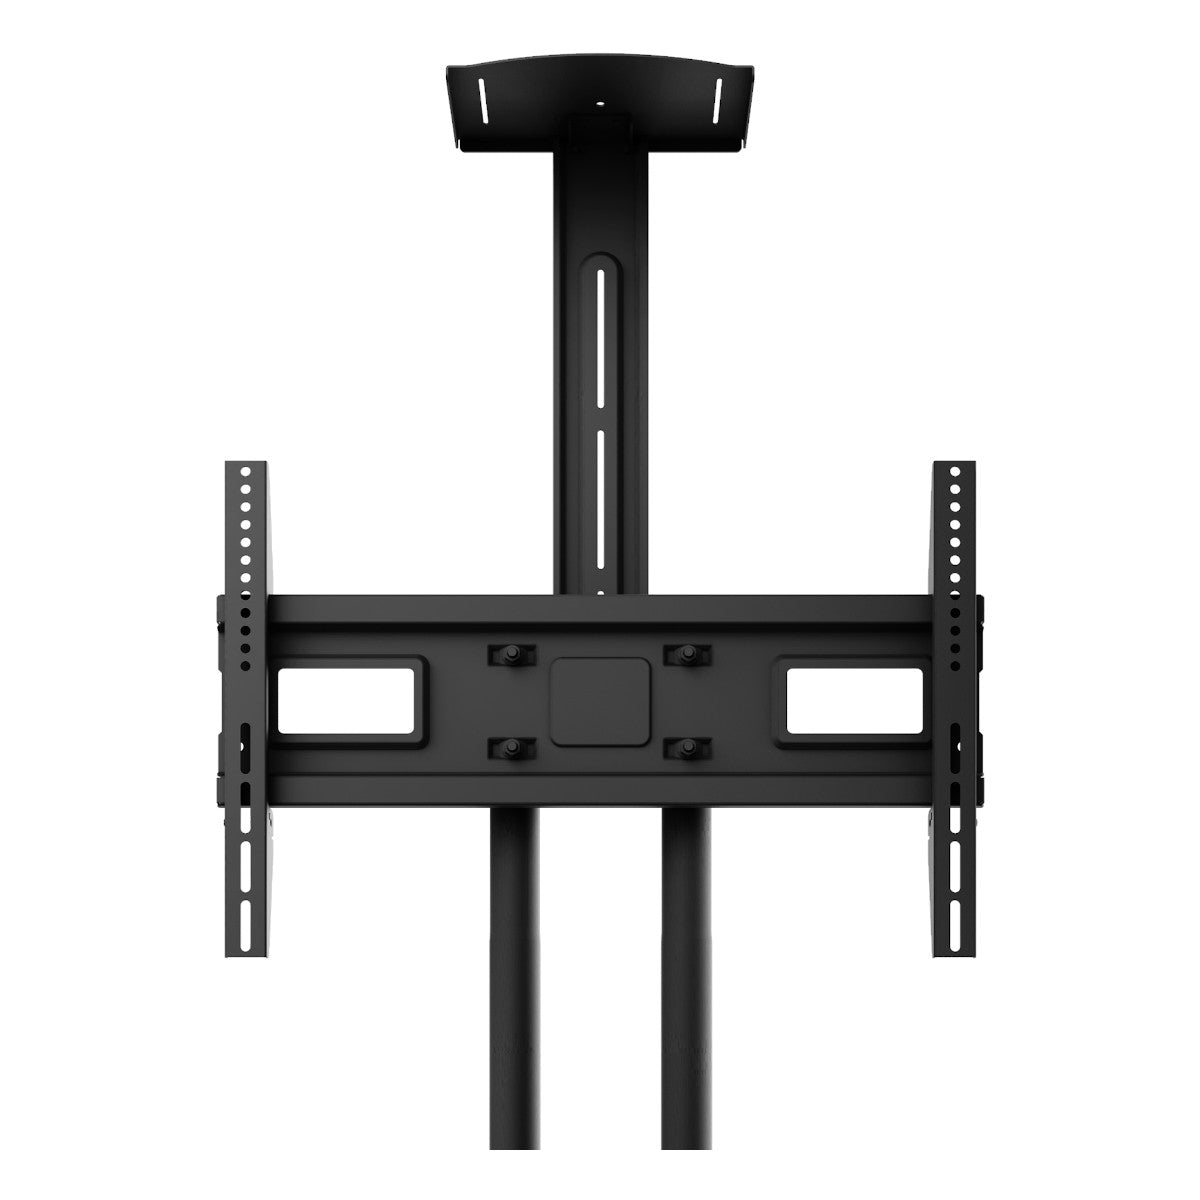 Kanto MTM65PL Mobile TV Mount with Adjustable Shelf for 37-inch to 65-inch TVs (Black)